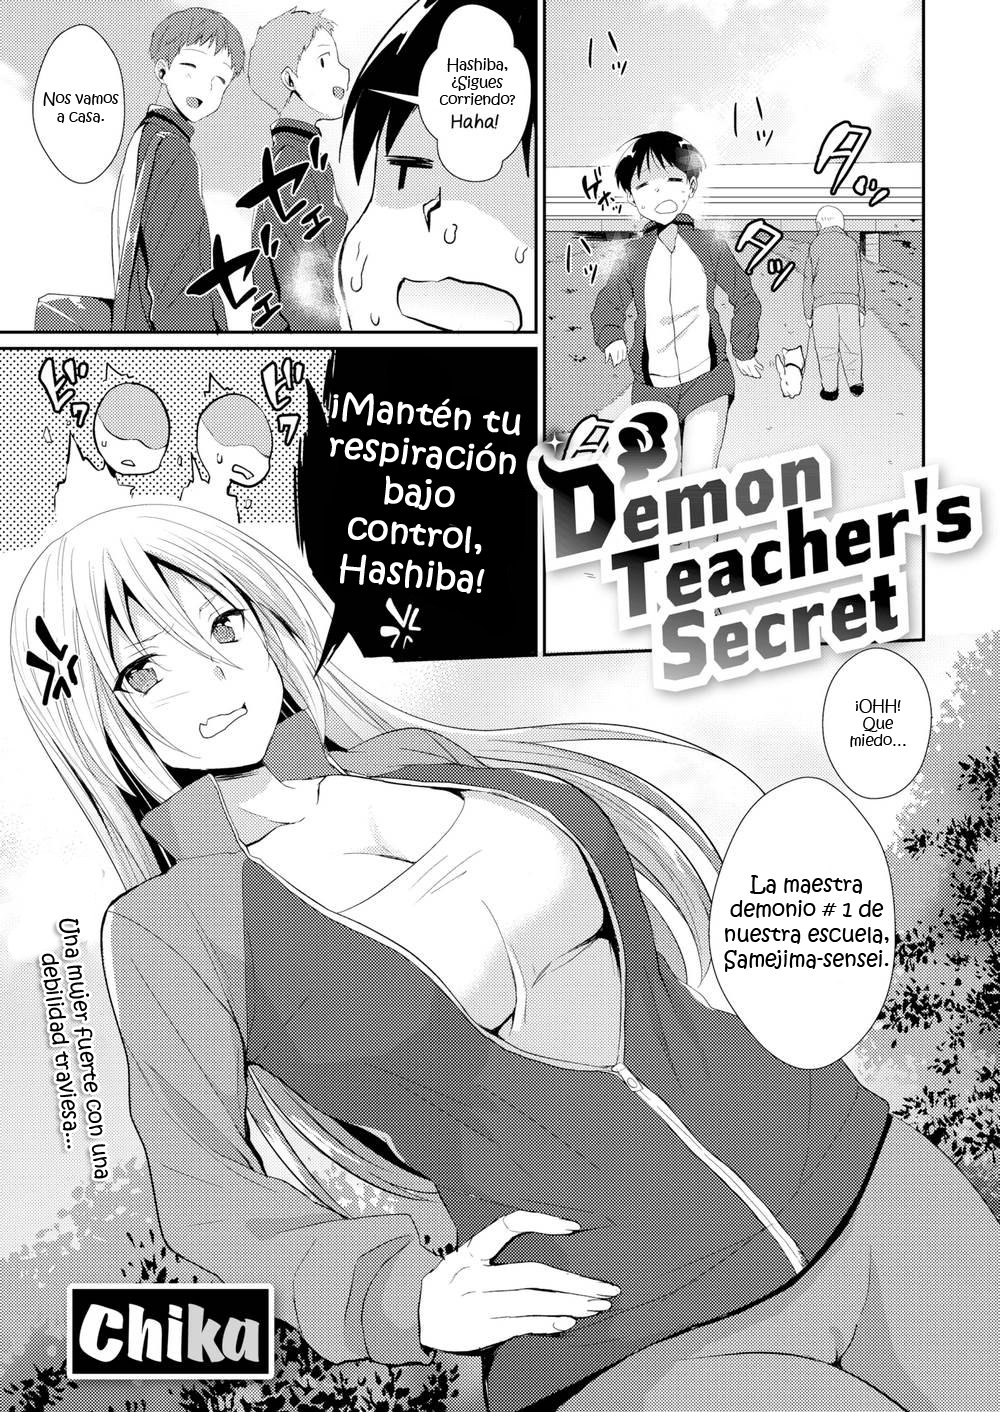 Demon Teacher is Secret - 0